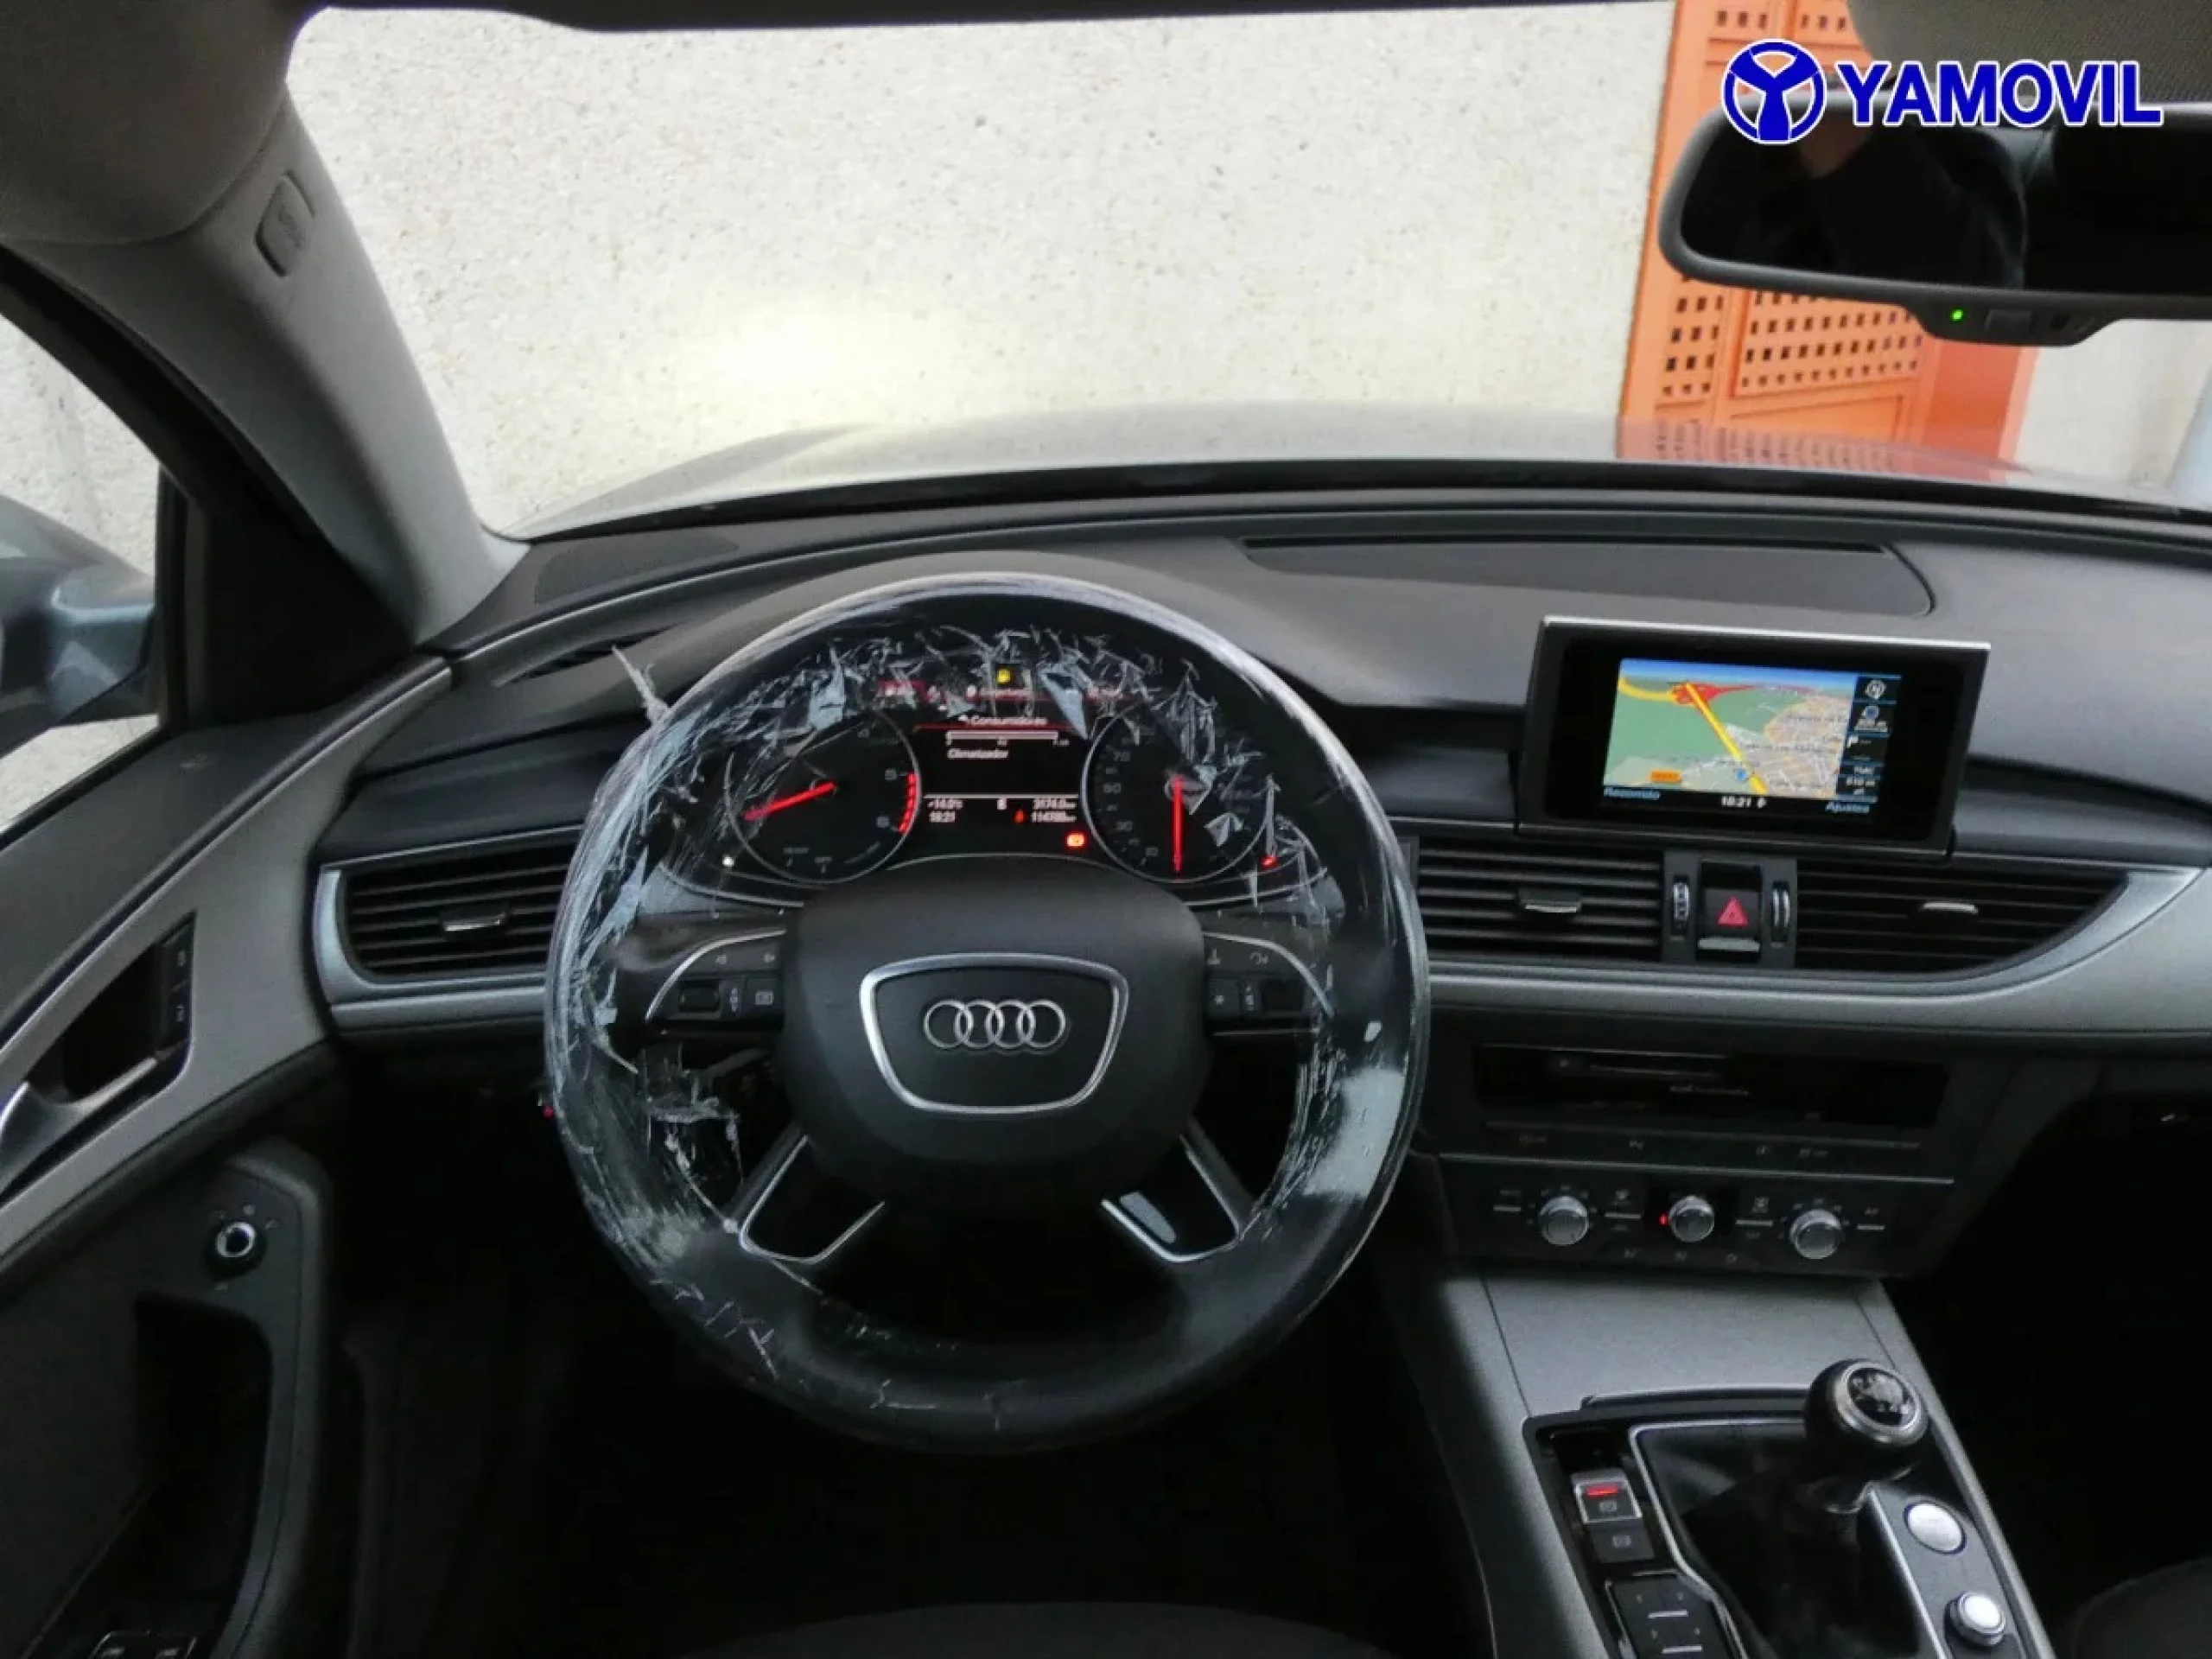 Audi A6 Advanced edition 2.0 TDI ultra 140 kW (190 CV) - Foto 17